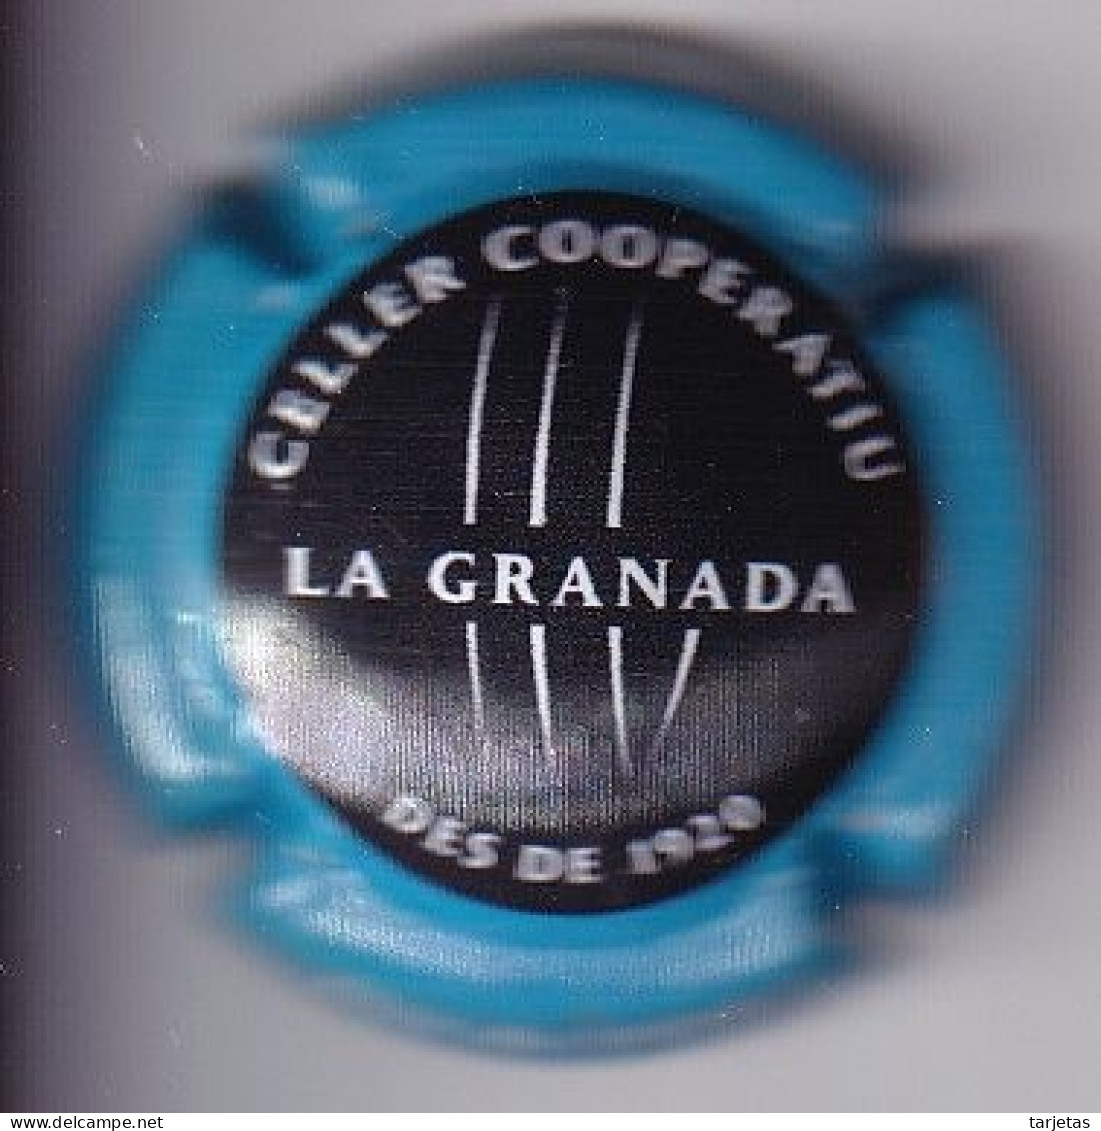 PLACA DE CAVA CELLER COOPERATIVA LA GRANADA (CAPSULE) - Sparkling Wine